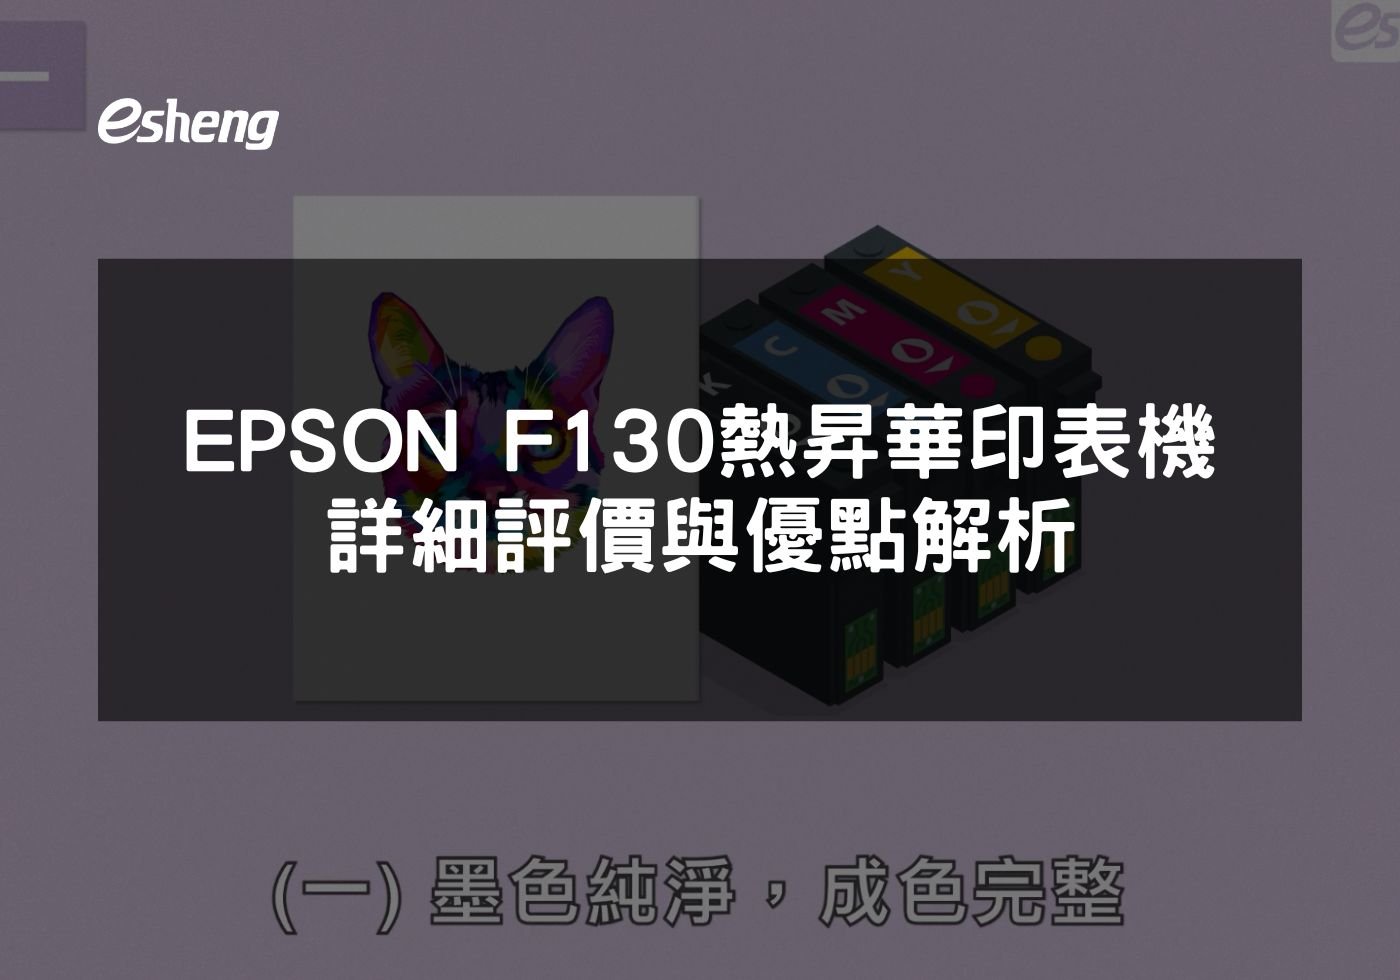 EPSON F130熱昇華印表機詳細評價與優點解析